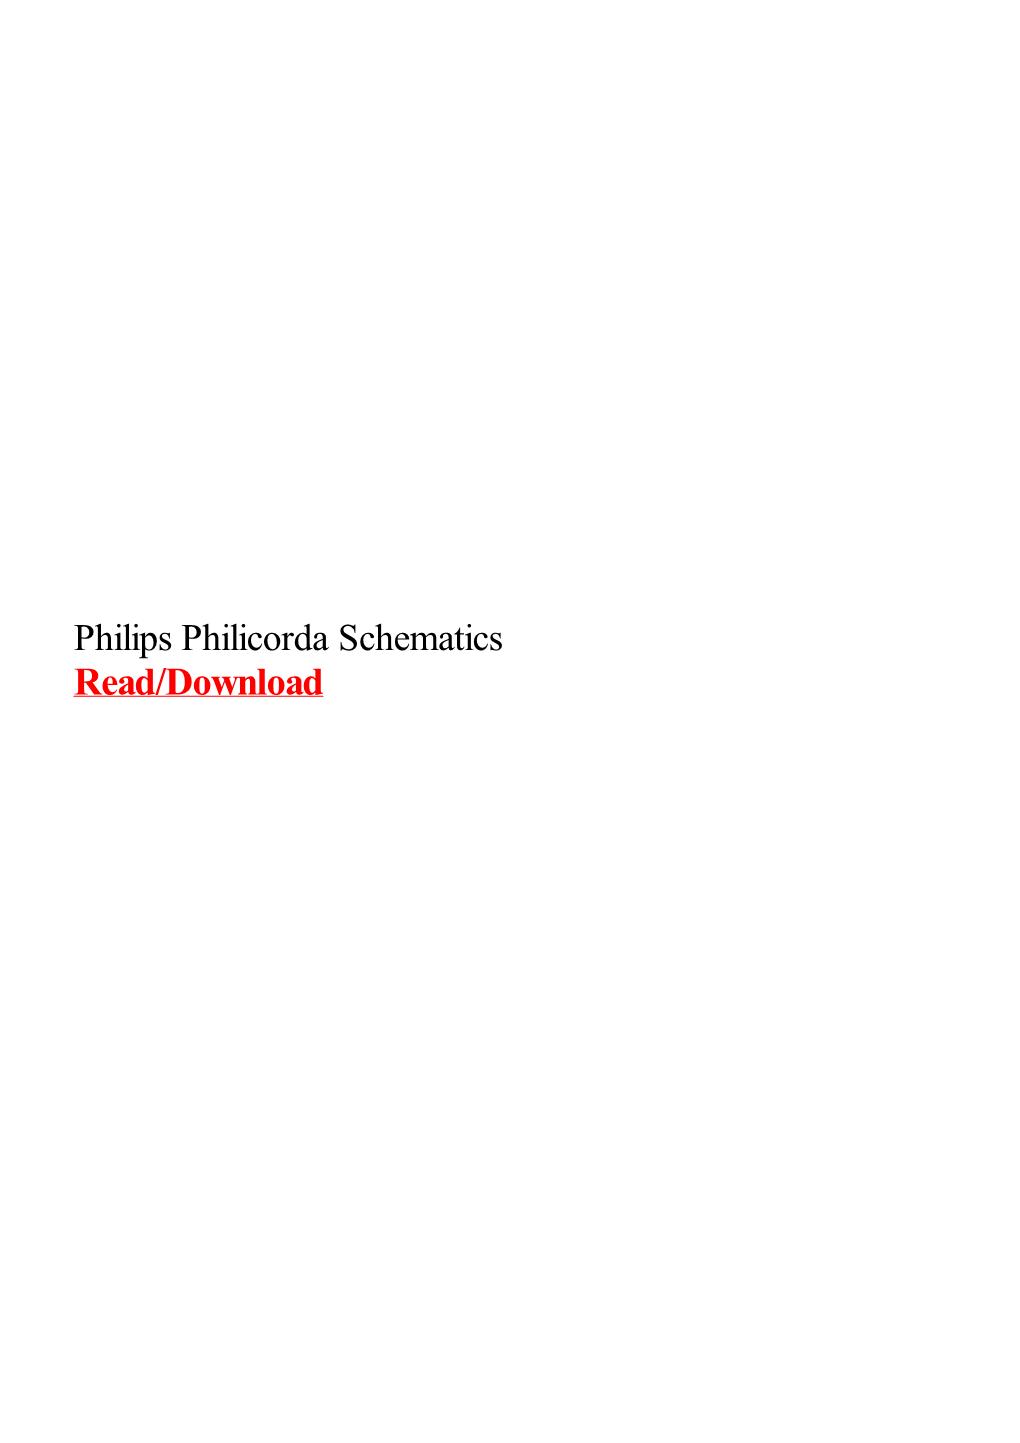 Philips Philicorda Schematics